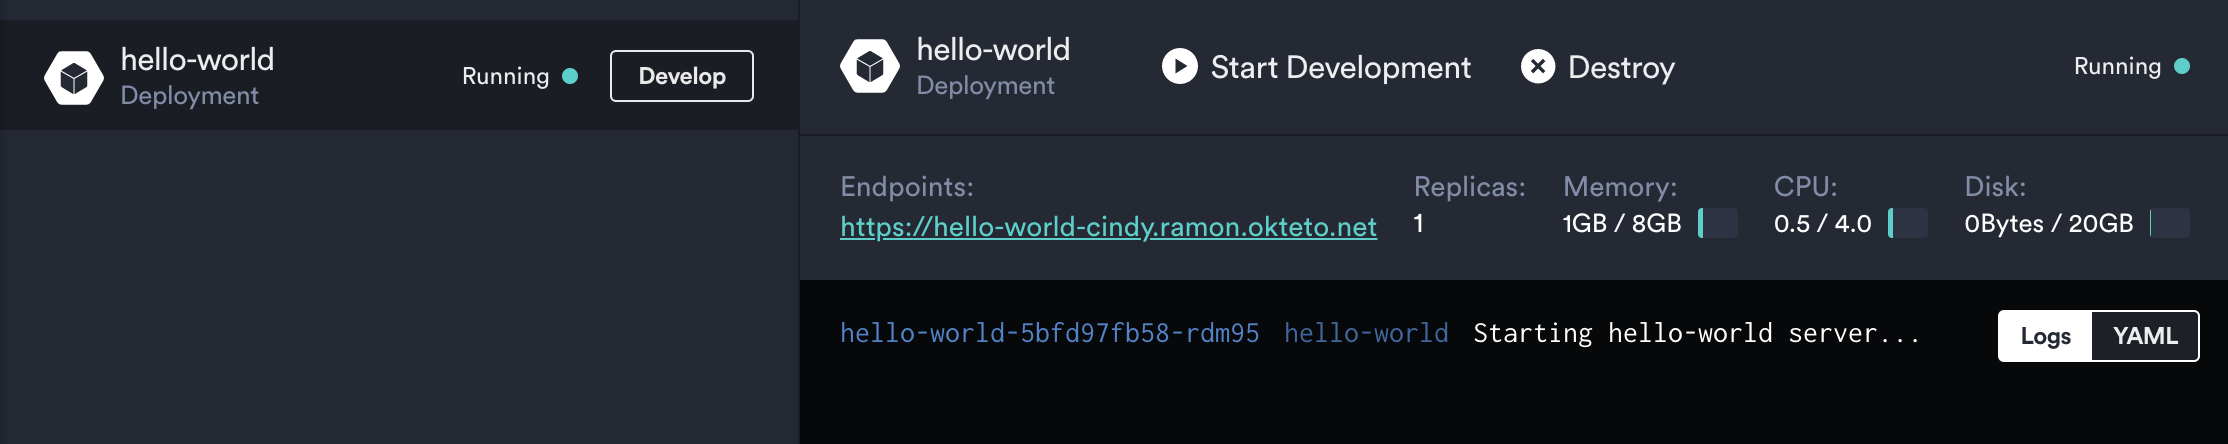 Okteto dashboard of Hello World app